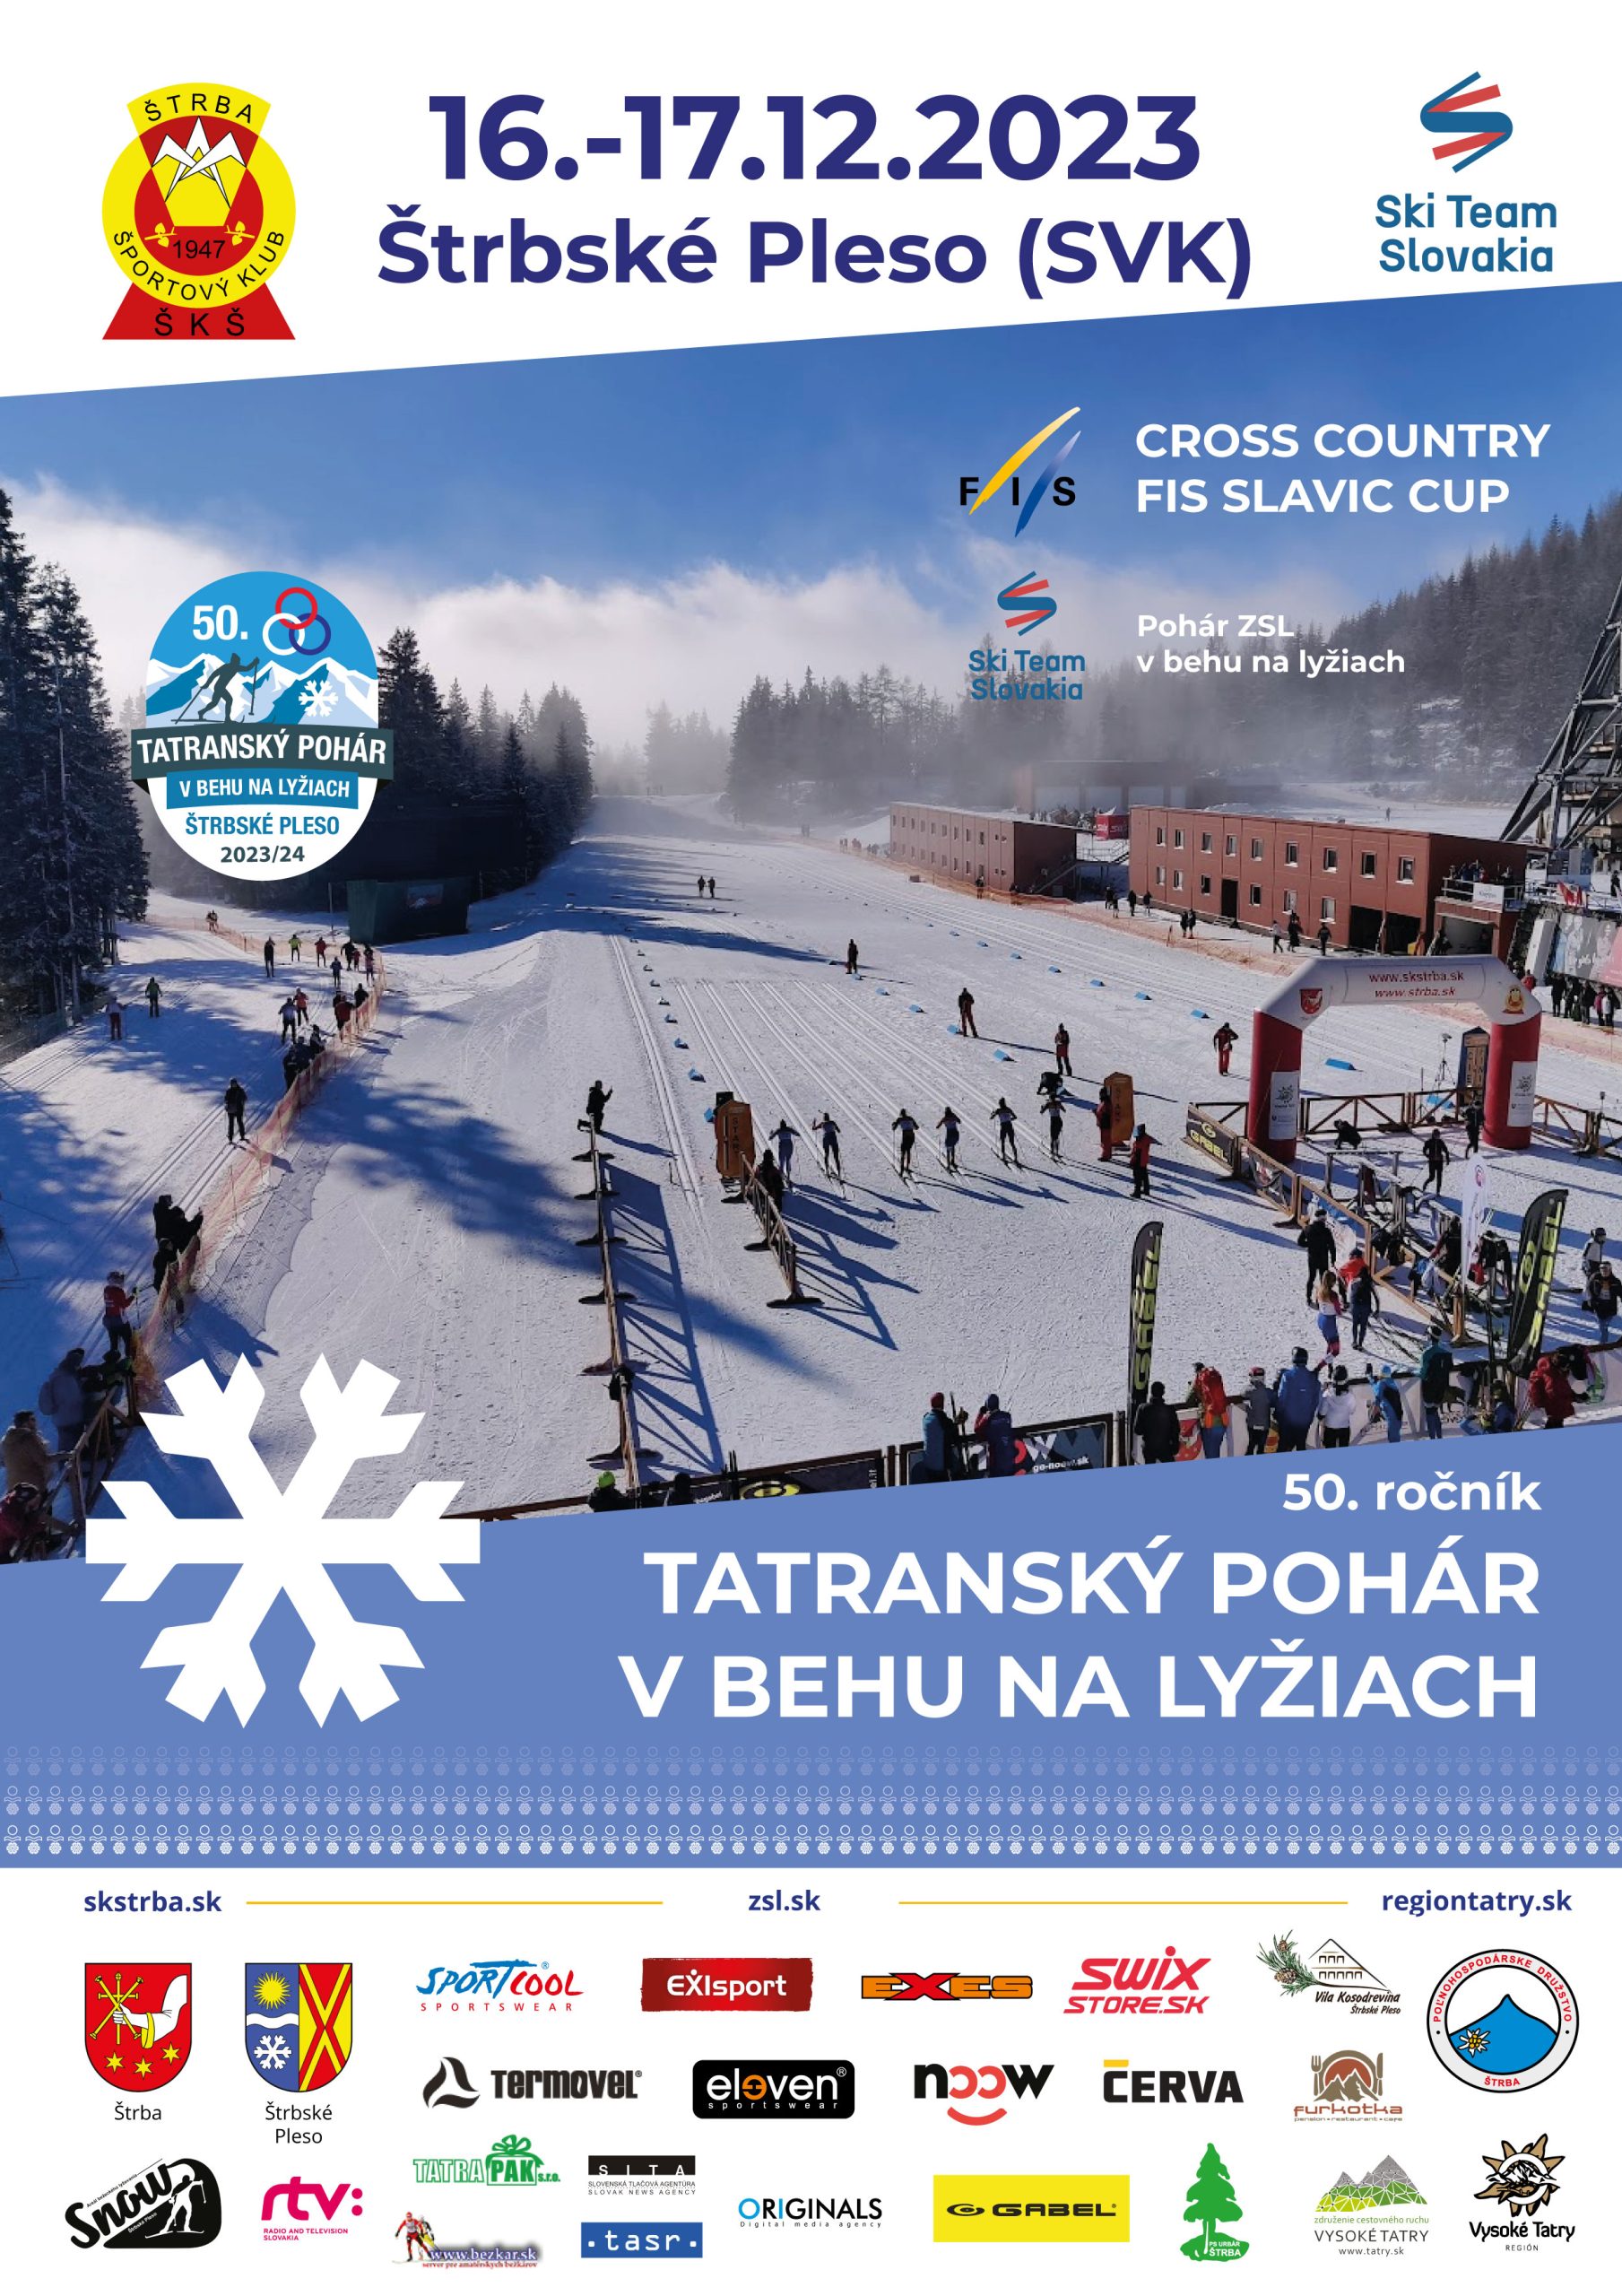 Tatransk pohr v behu na lyiach - FIS Slavic Cup 2023 trbsk Pleso - 50. ronk